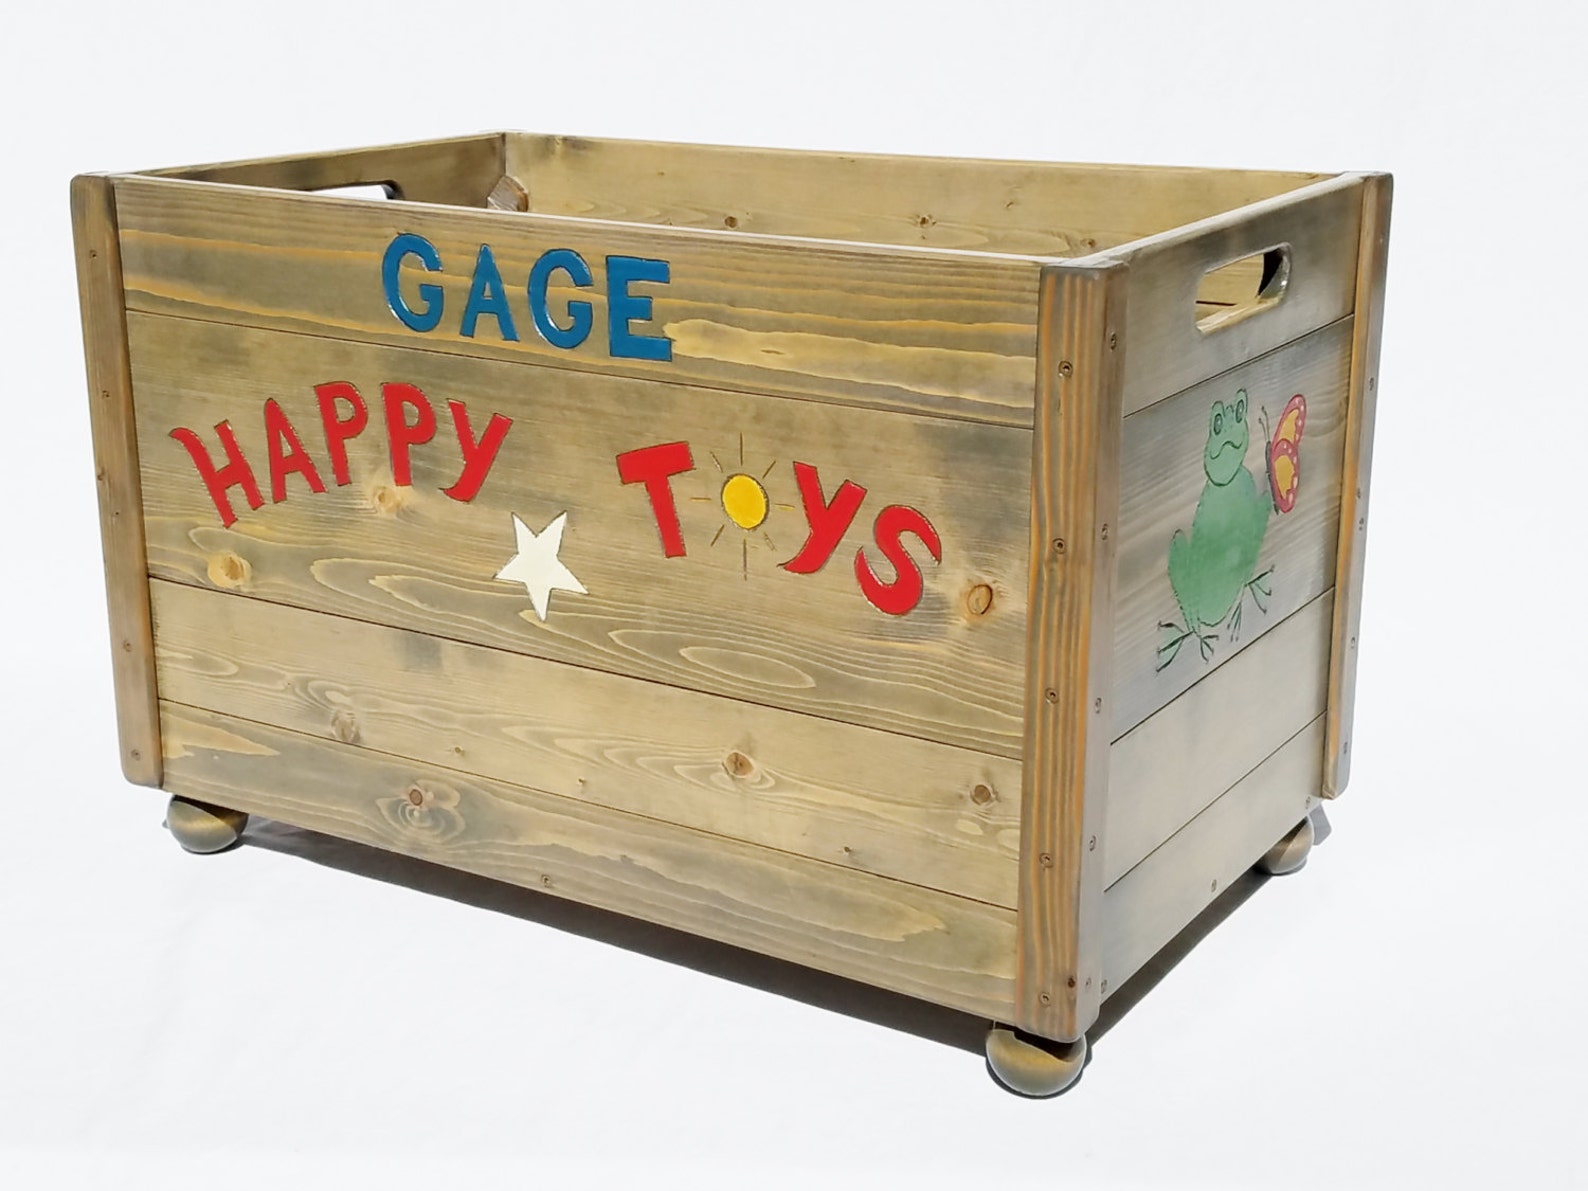 In my toy box i ve got. Toy Box английский. S Box игрушки. Toybox игрушки. Toy Box for Kids.